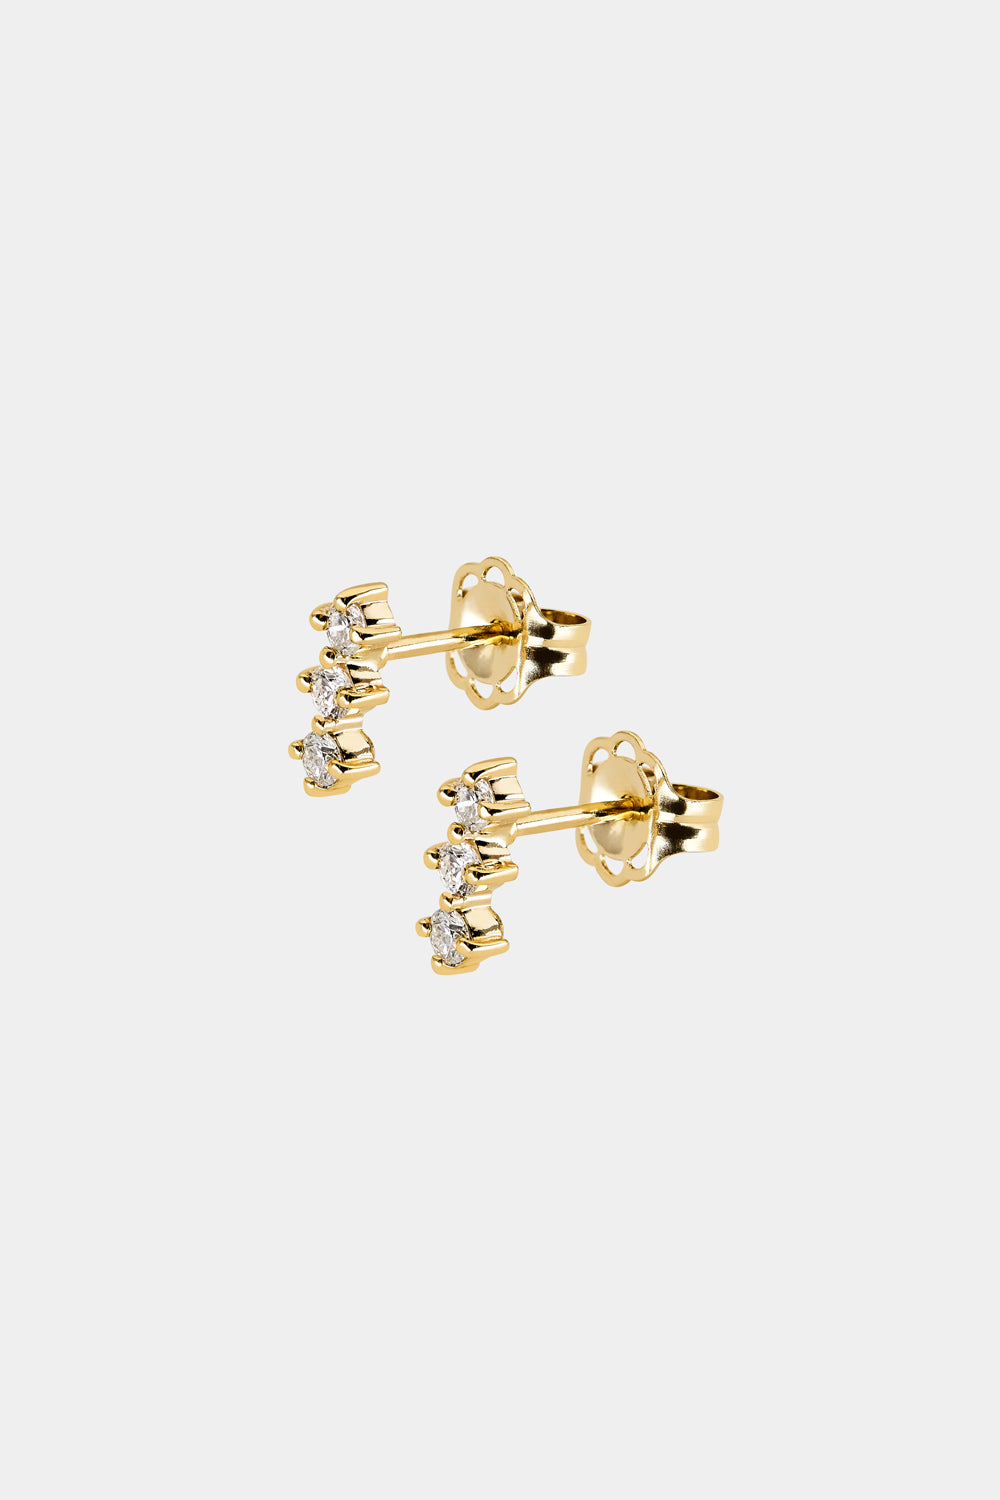 Buttercup Diamond Bar Earrings | Yellow Gold, More Options Available| Natasha Schweitzer